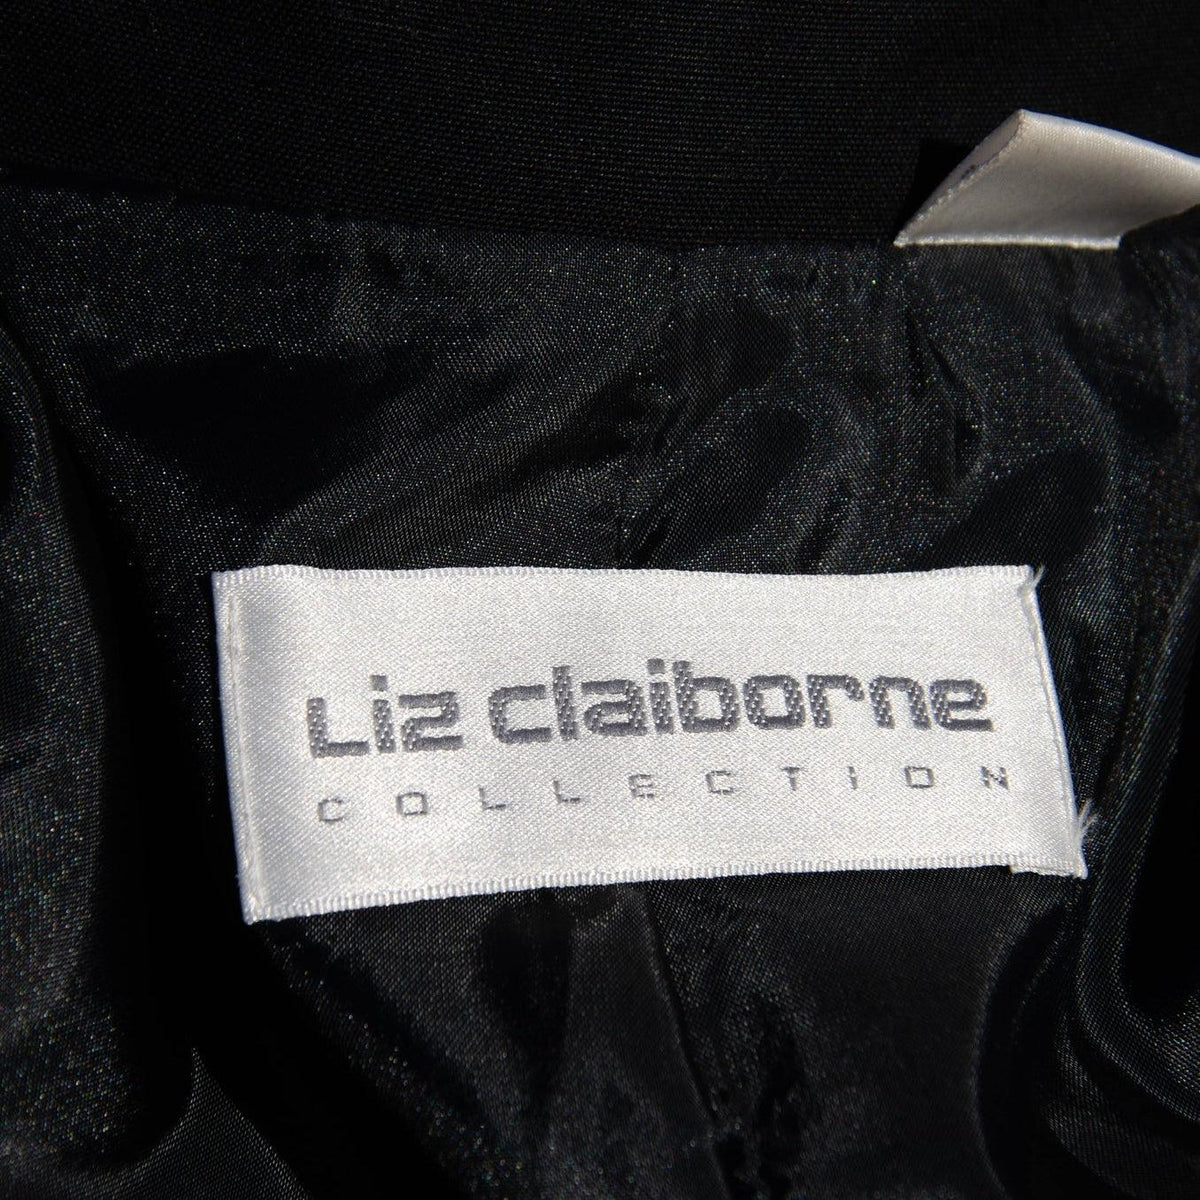 LIZ CLAIBORNE Vintage Black Single Button Jacket | Size M/L - theREMODA